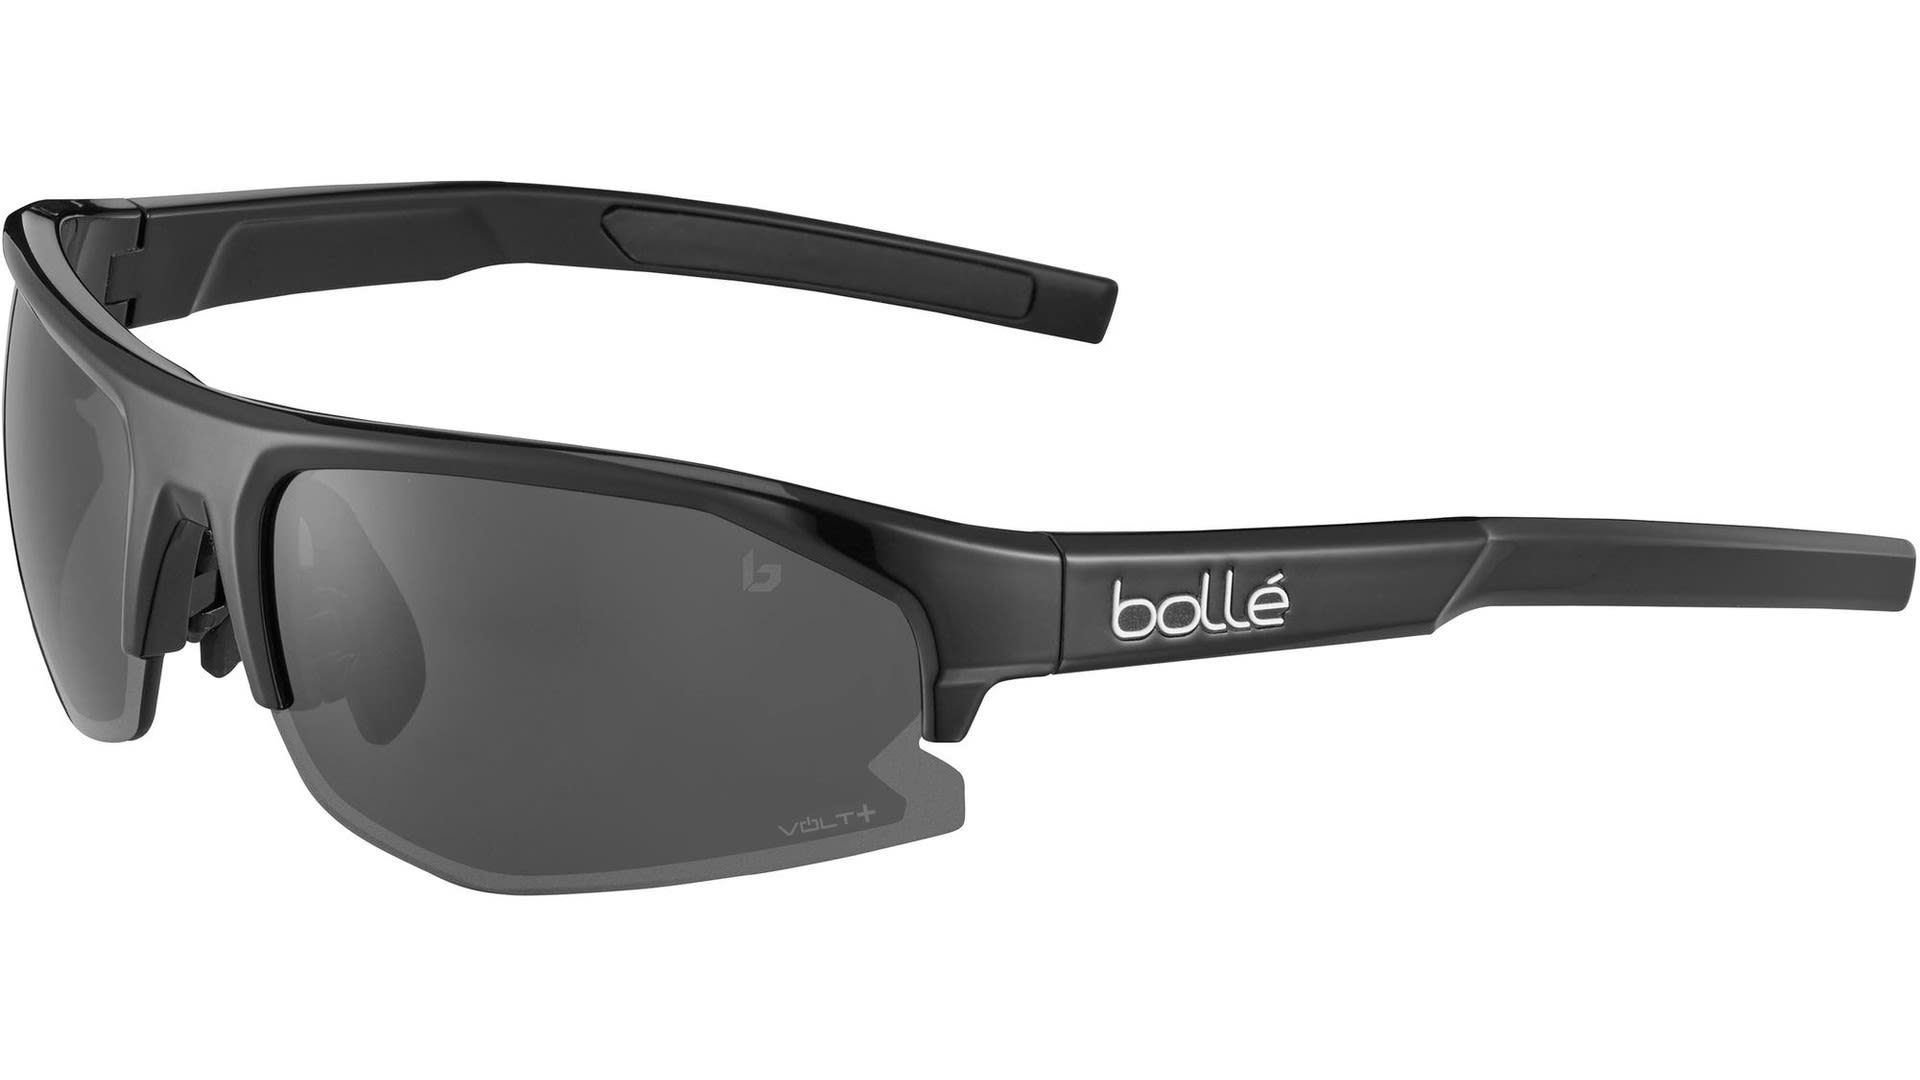 Bolt S Bolle Bolle Classic Sportbrille 2.0 Accessoires